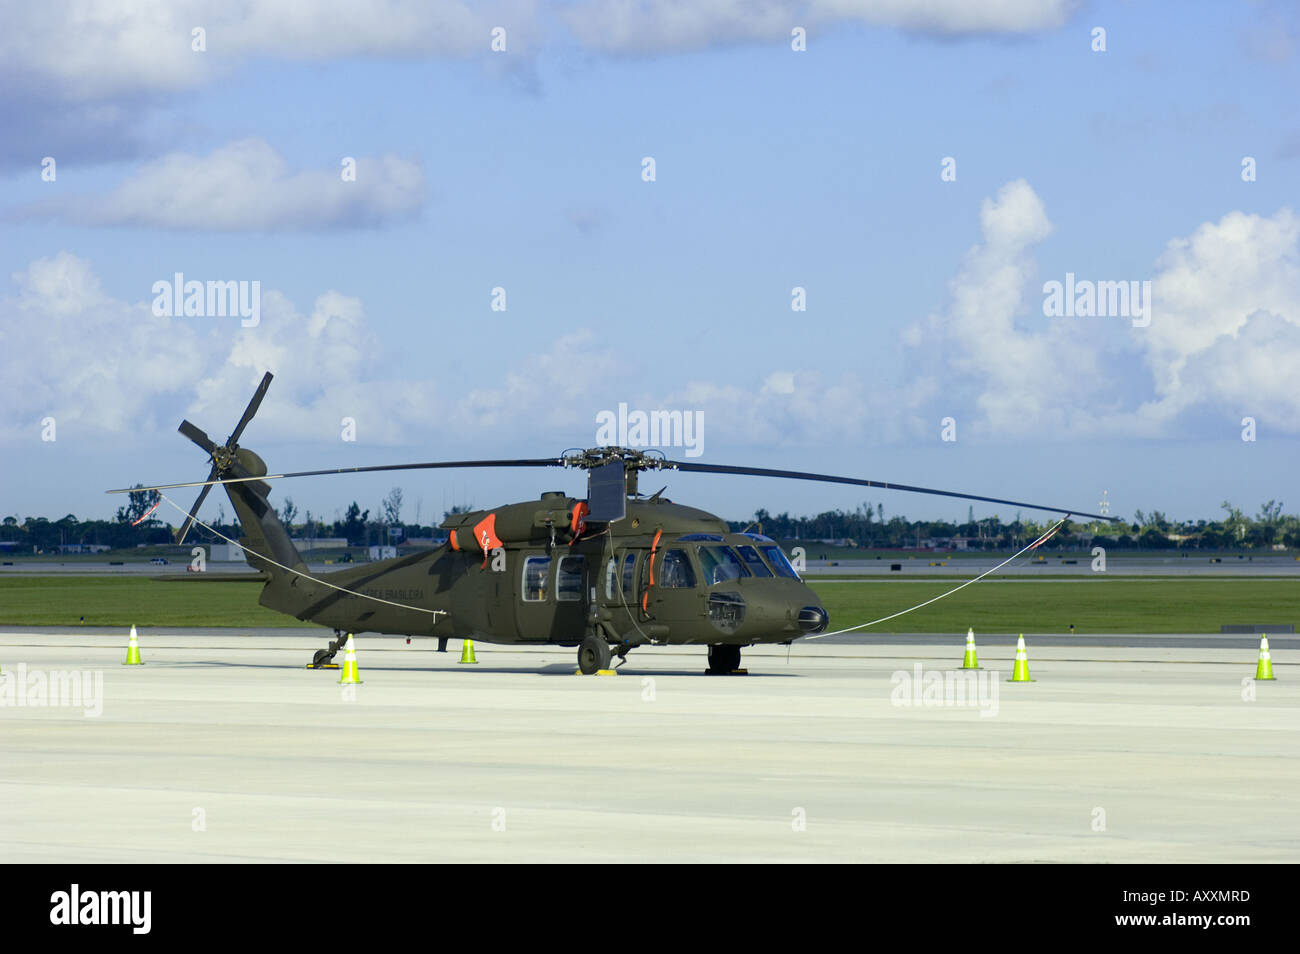 Forca Aerea Brasileira helicopterp helicopter military chopper aircraft Stock Photo